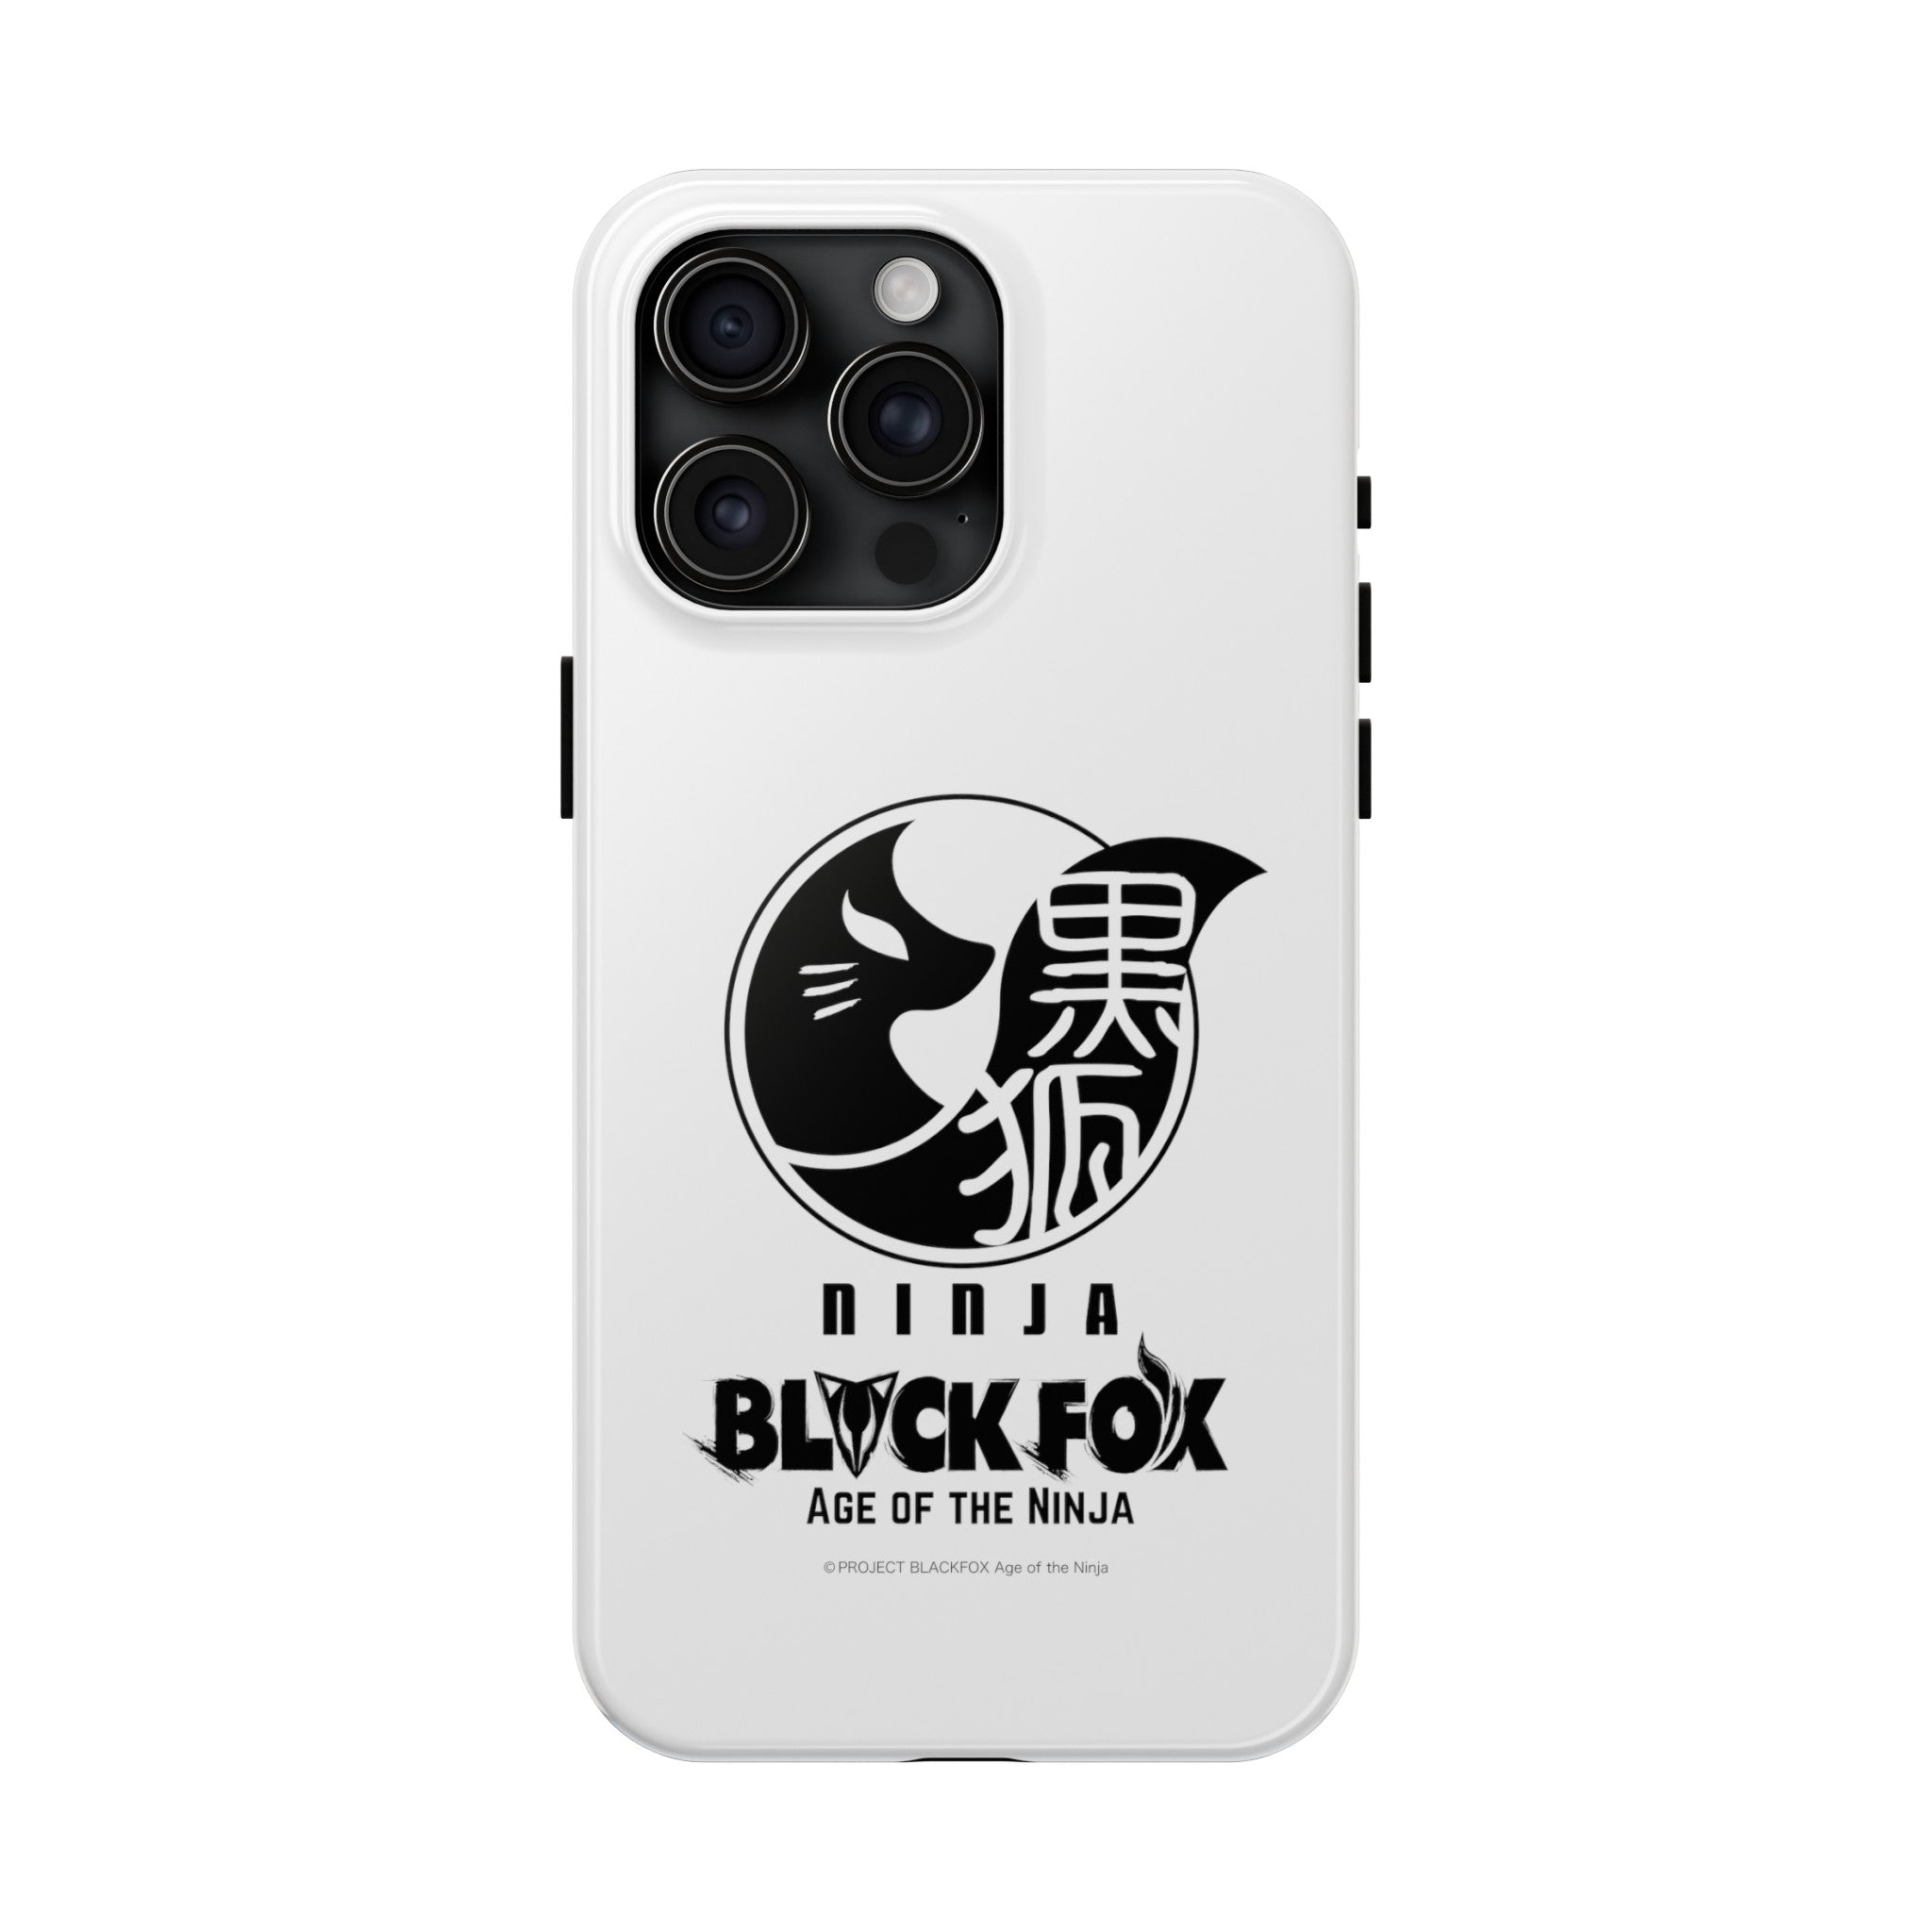 BLACKFOX INSIGNIA iPhone Case (Glossy White)